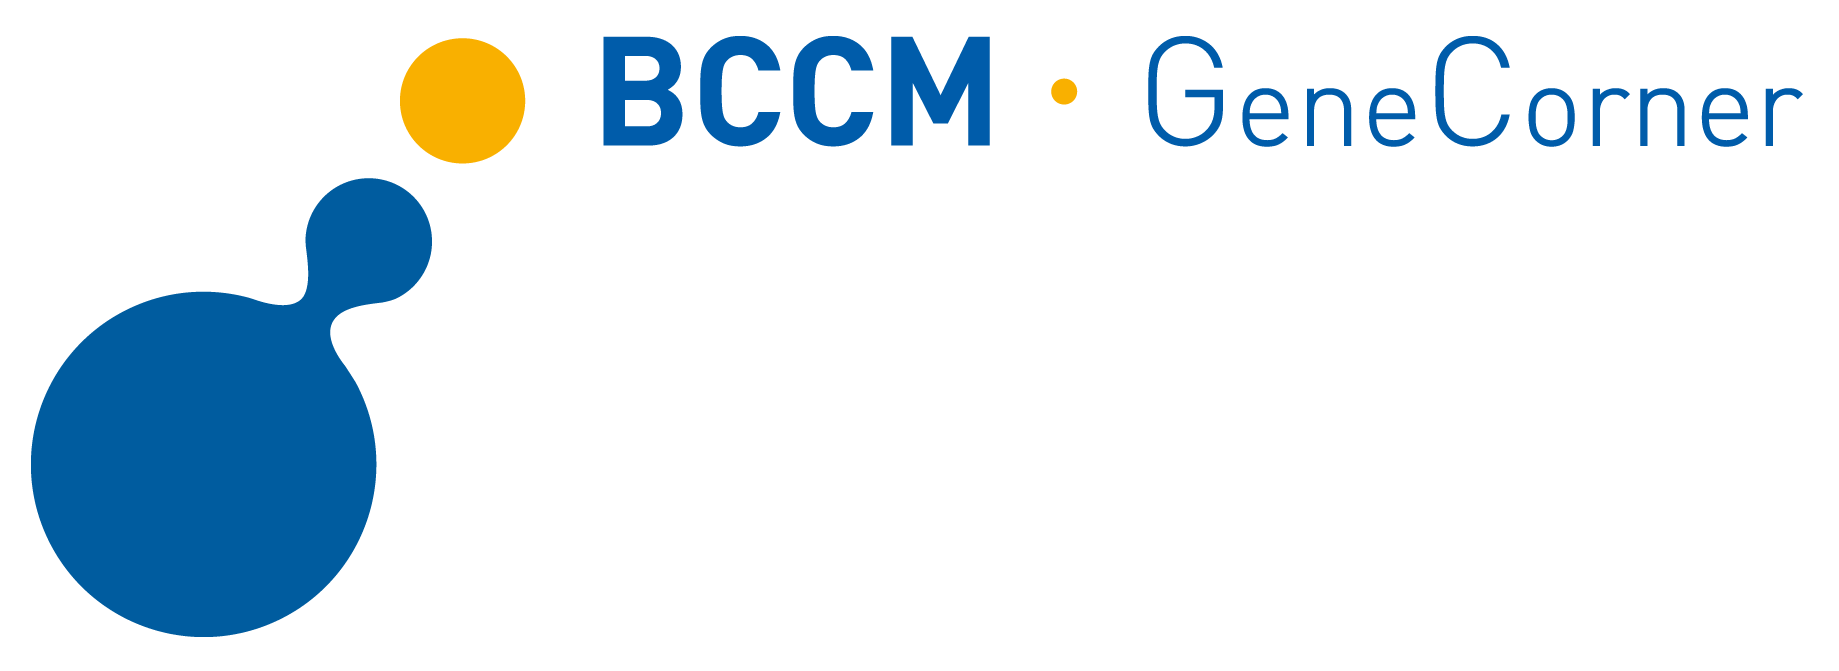 BCCM/GeneCorner Plasmid Collection